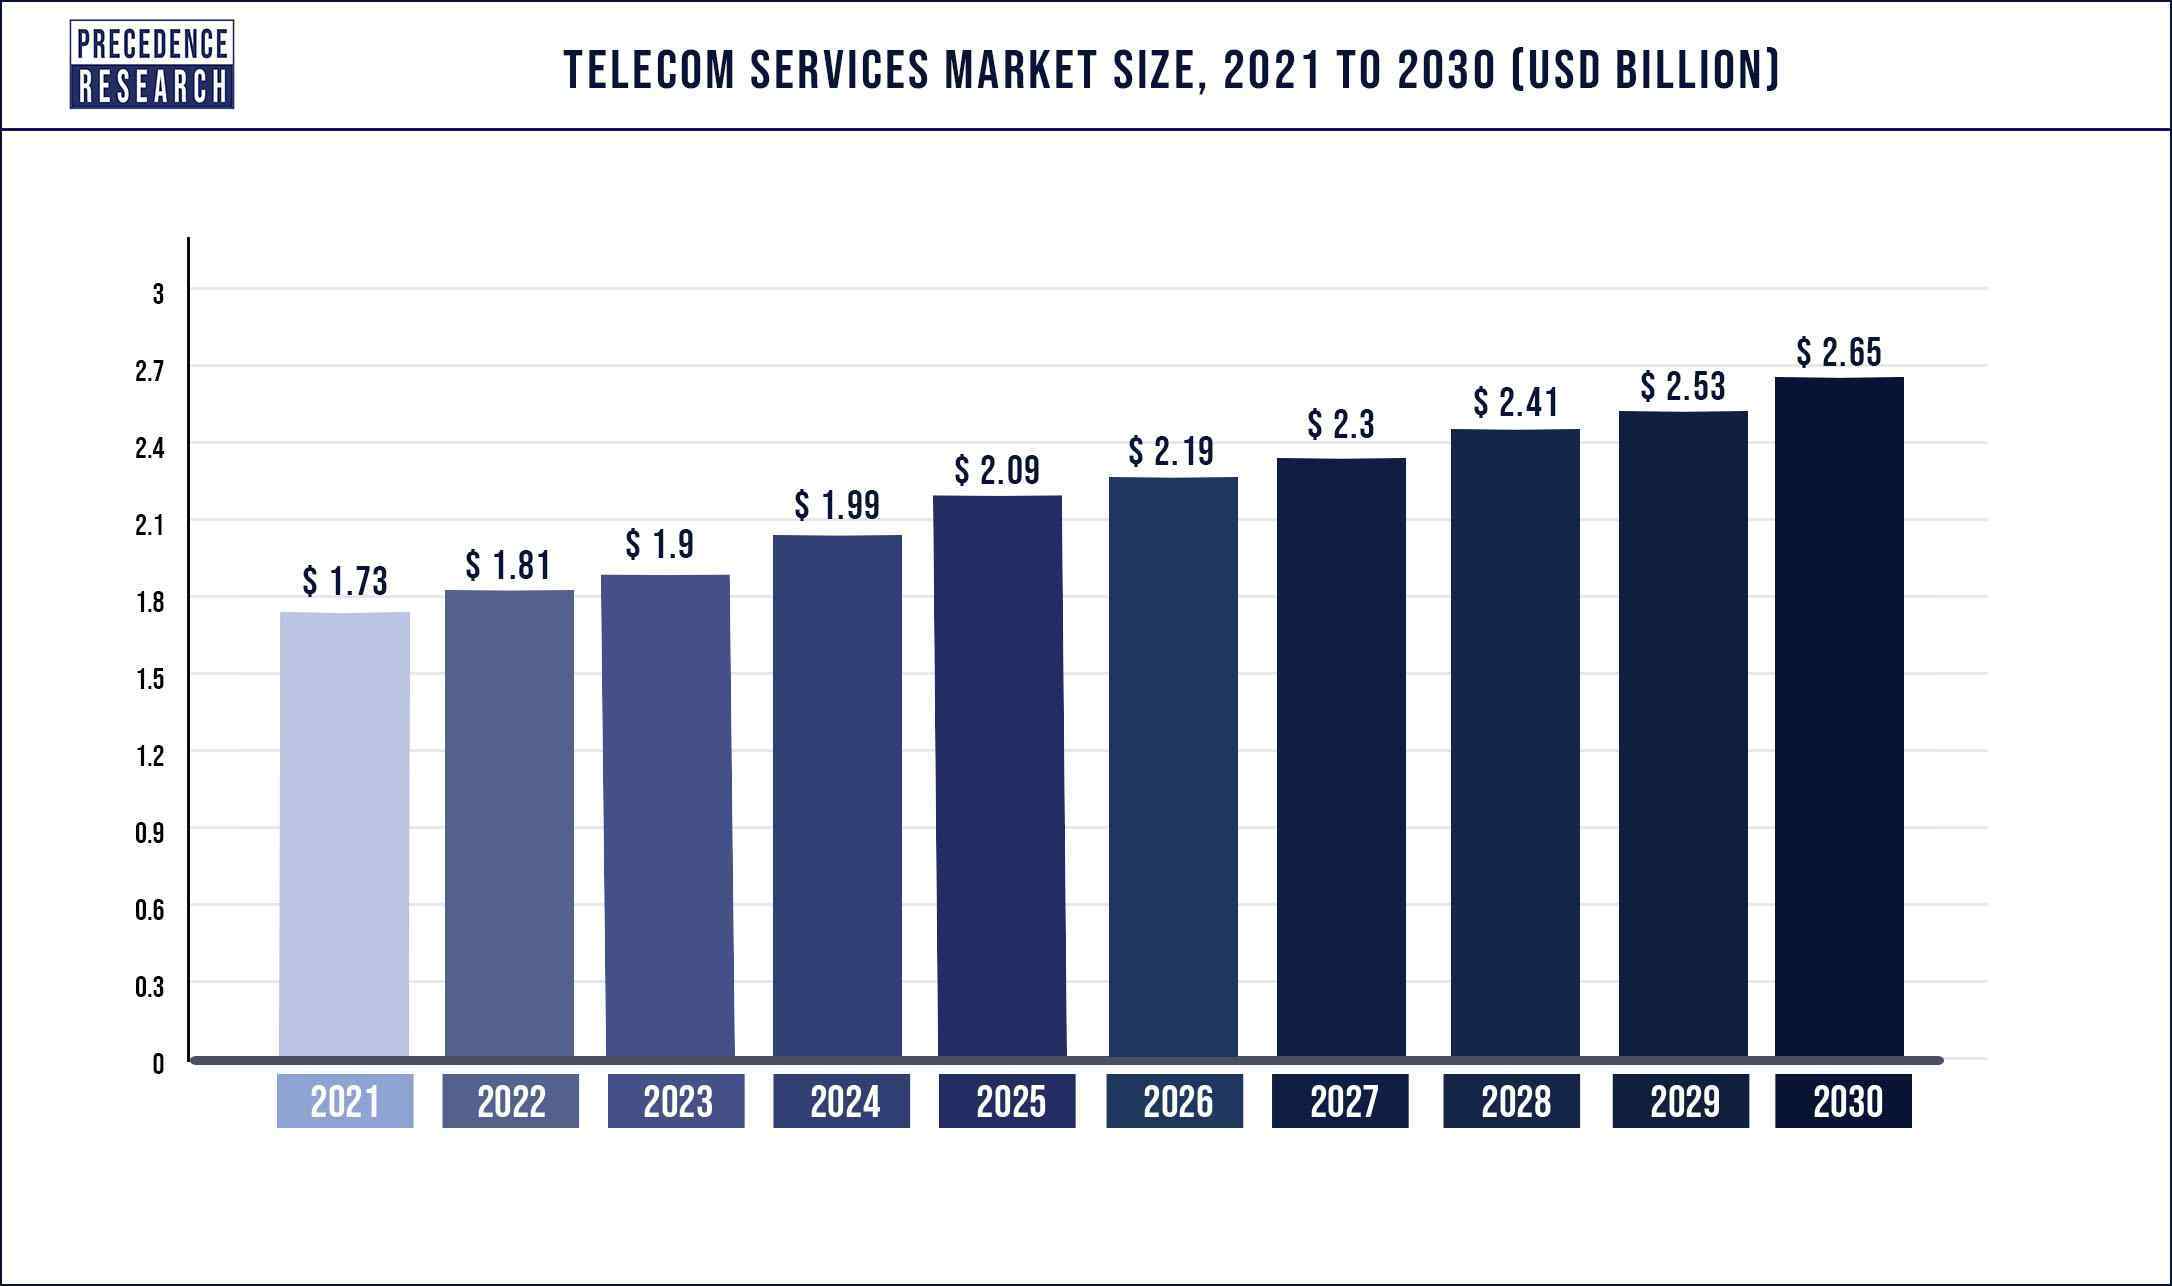 Telecom Services Market Size 2021 to 2030